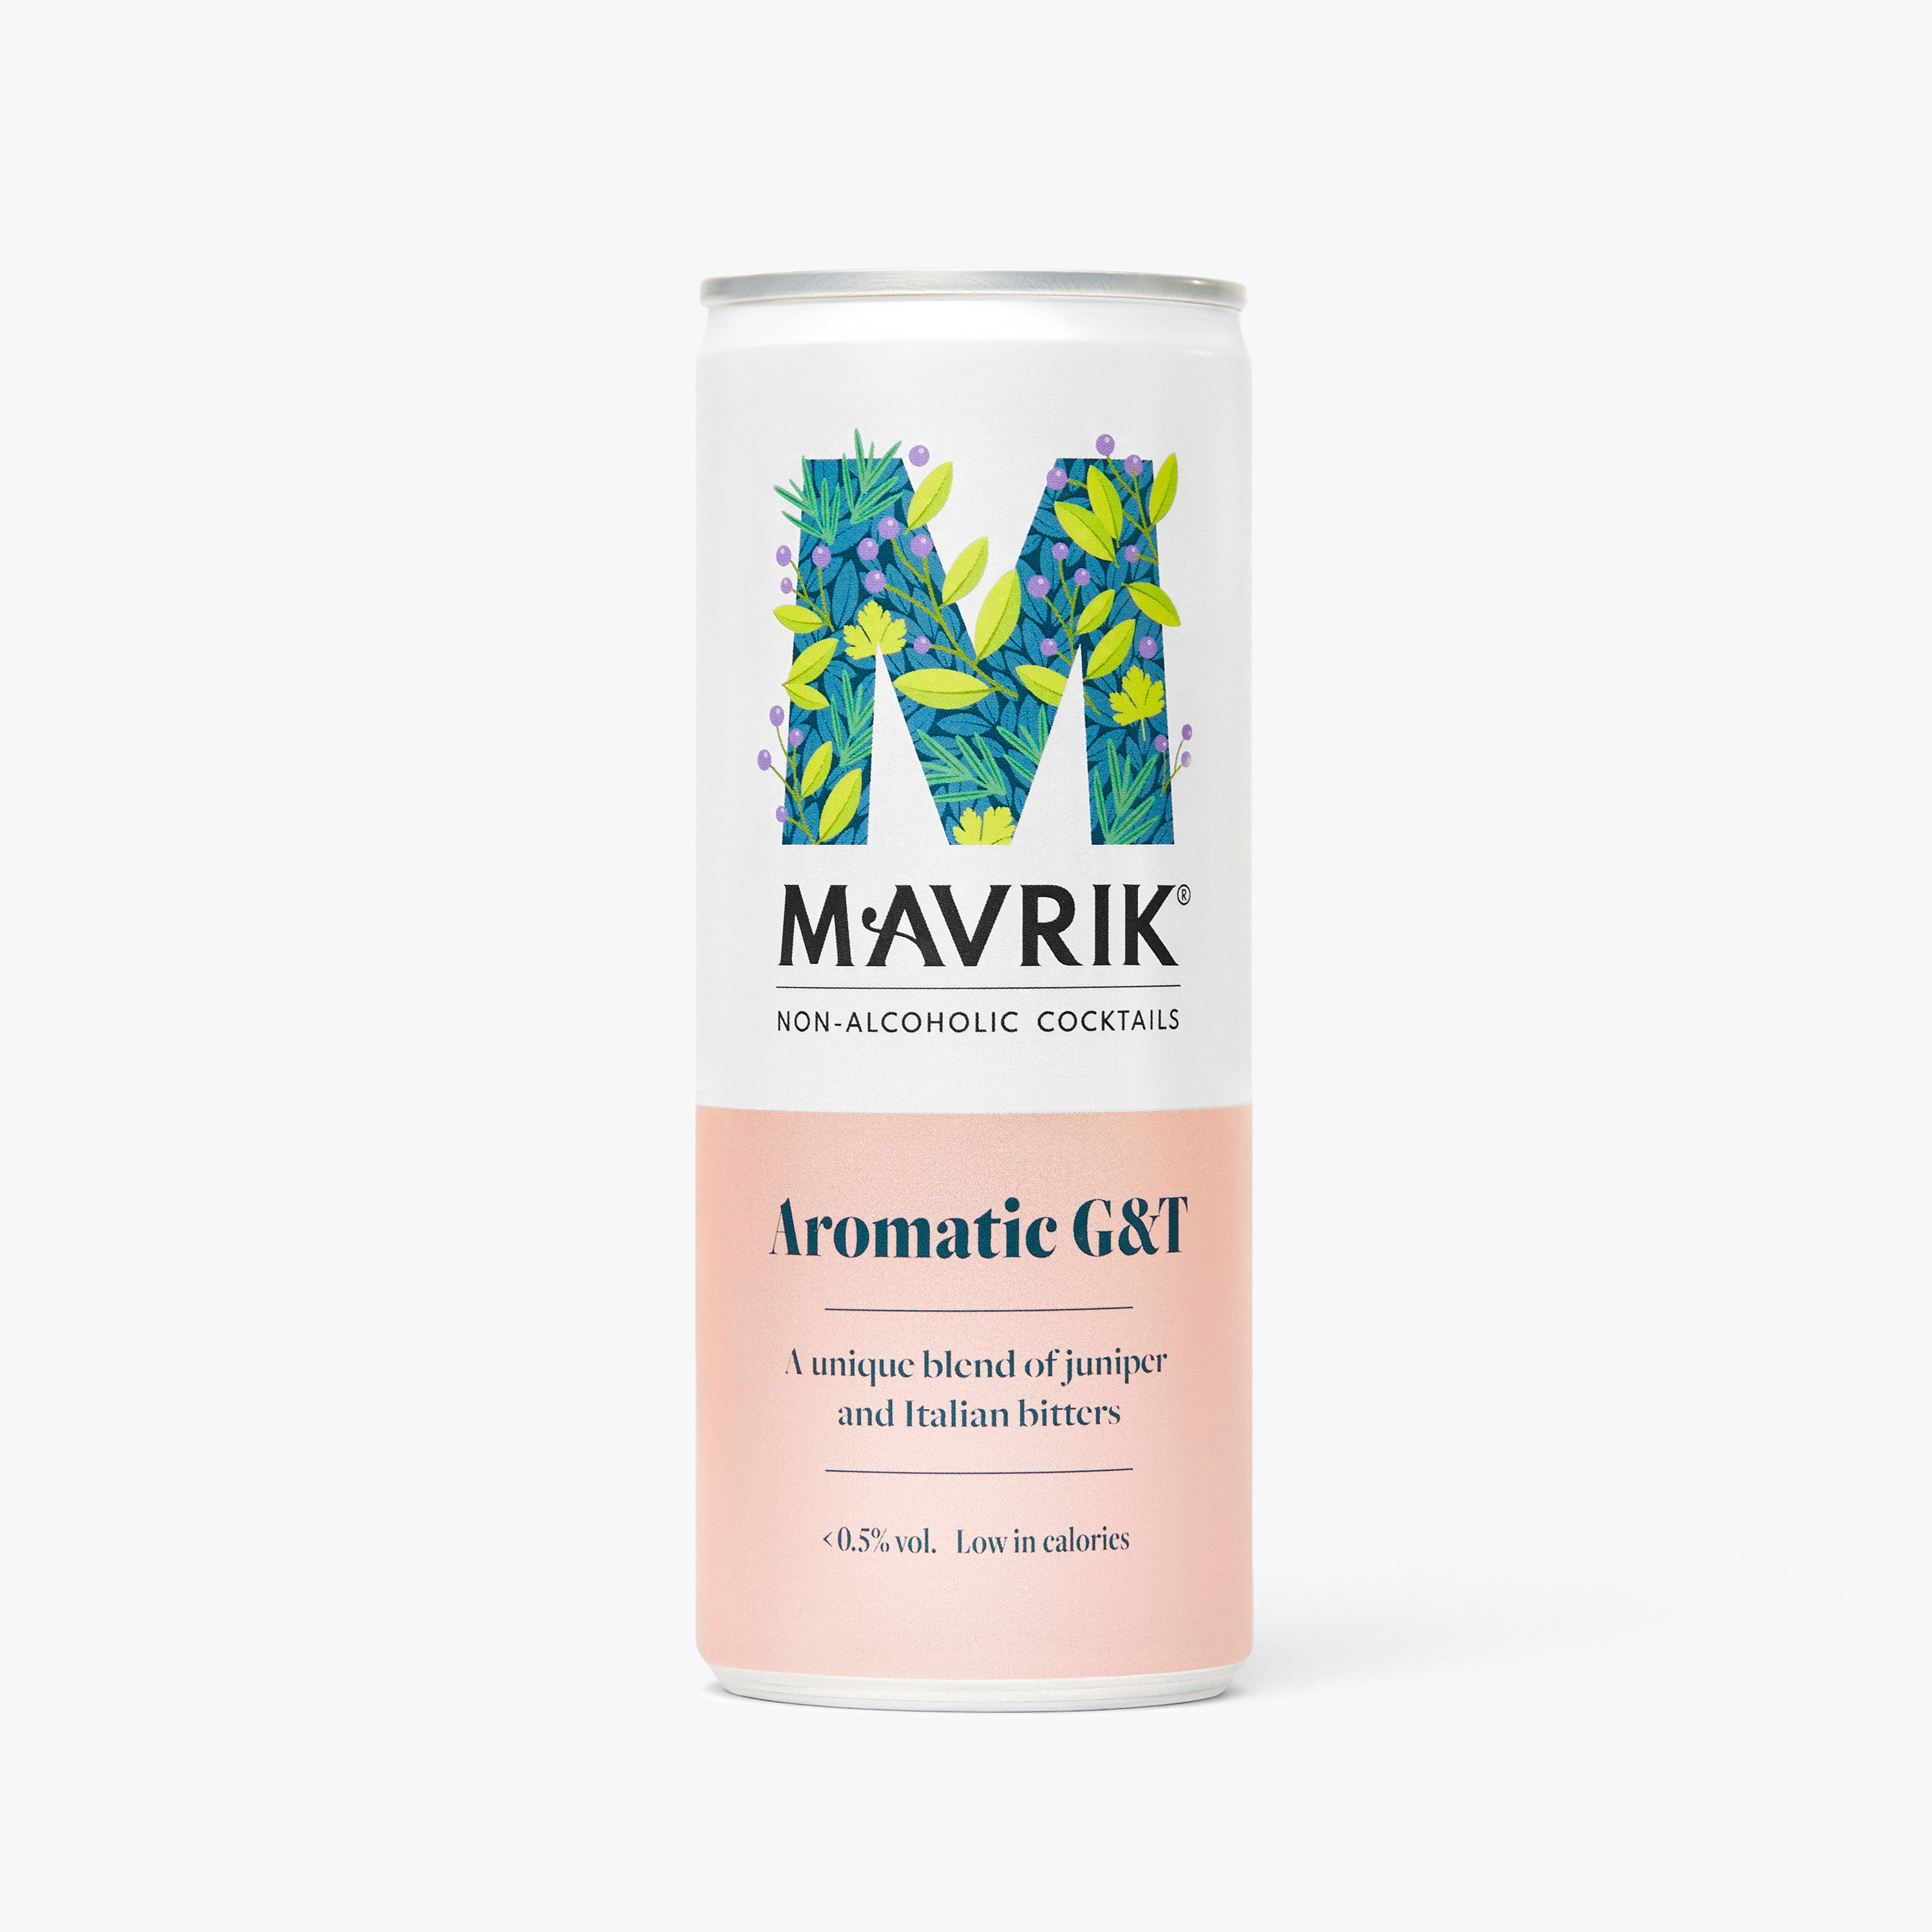 Mavrik's Aromatic G&T